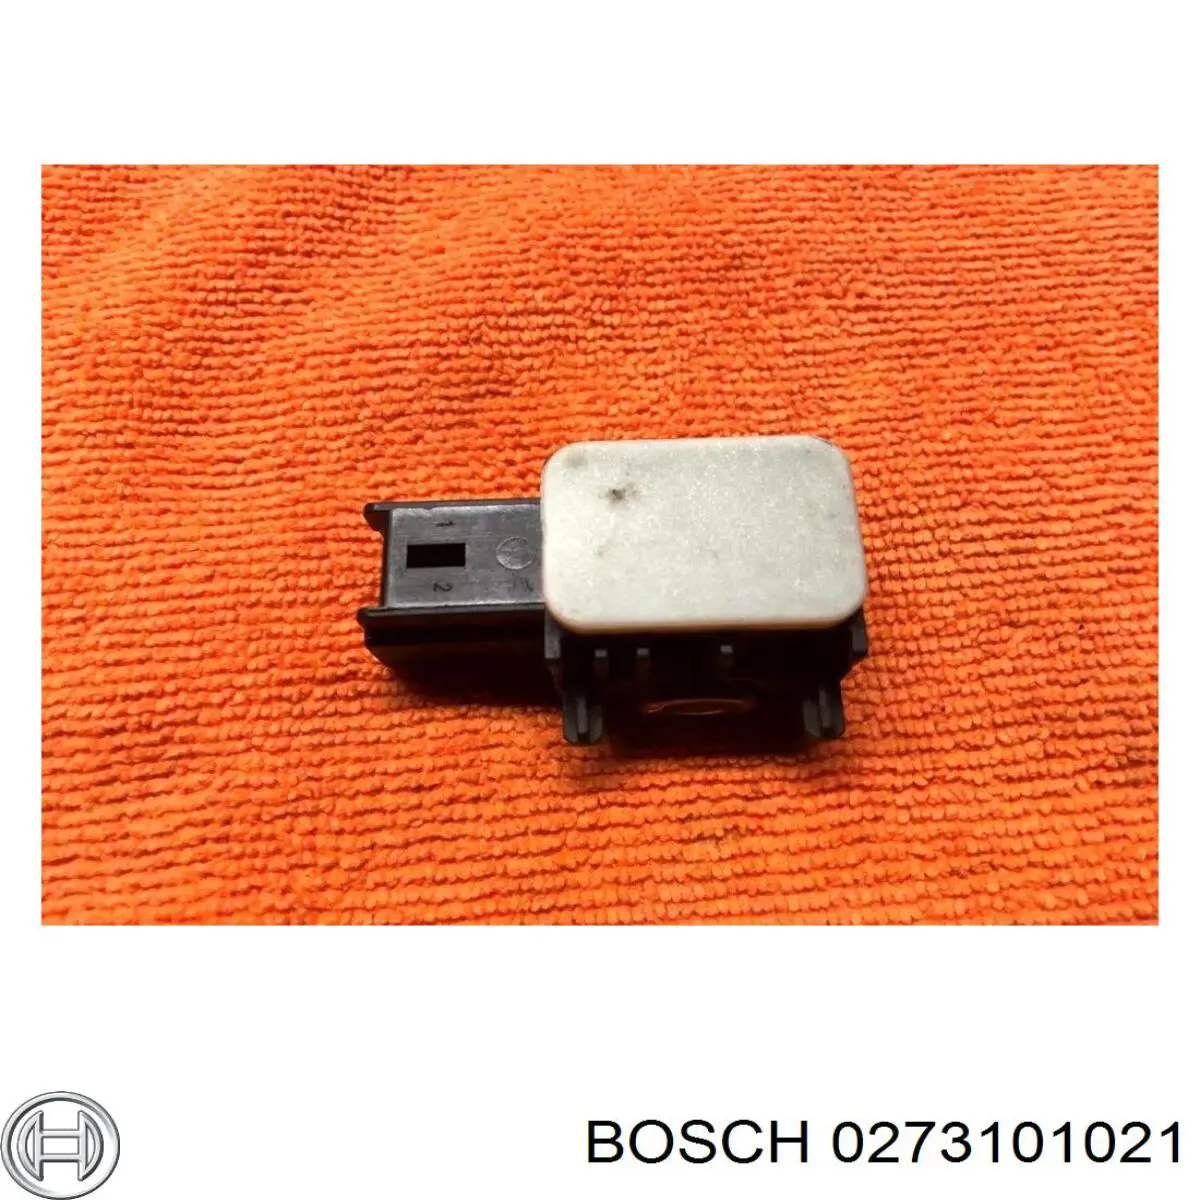 0273101021 Bosch sensor de posicion del pedal del acelerador